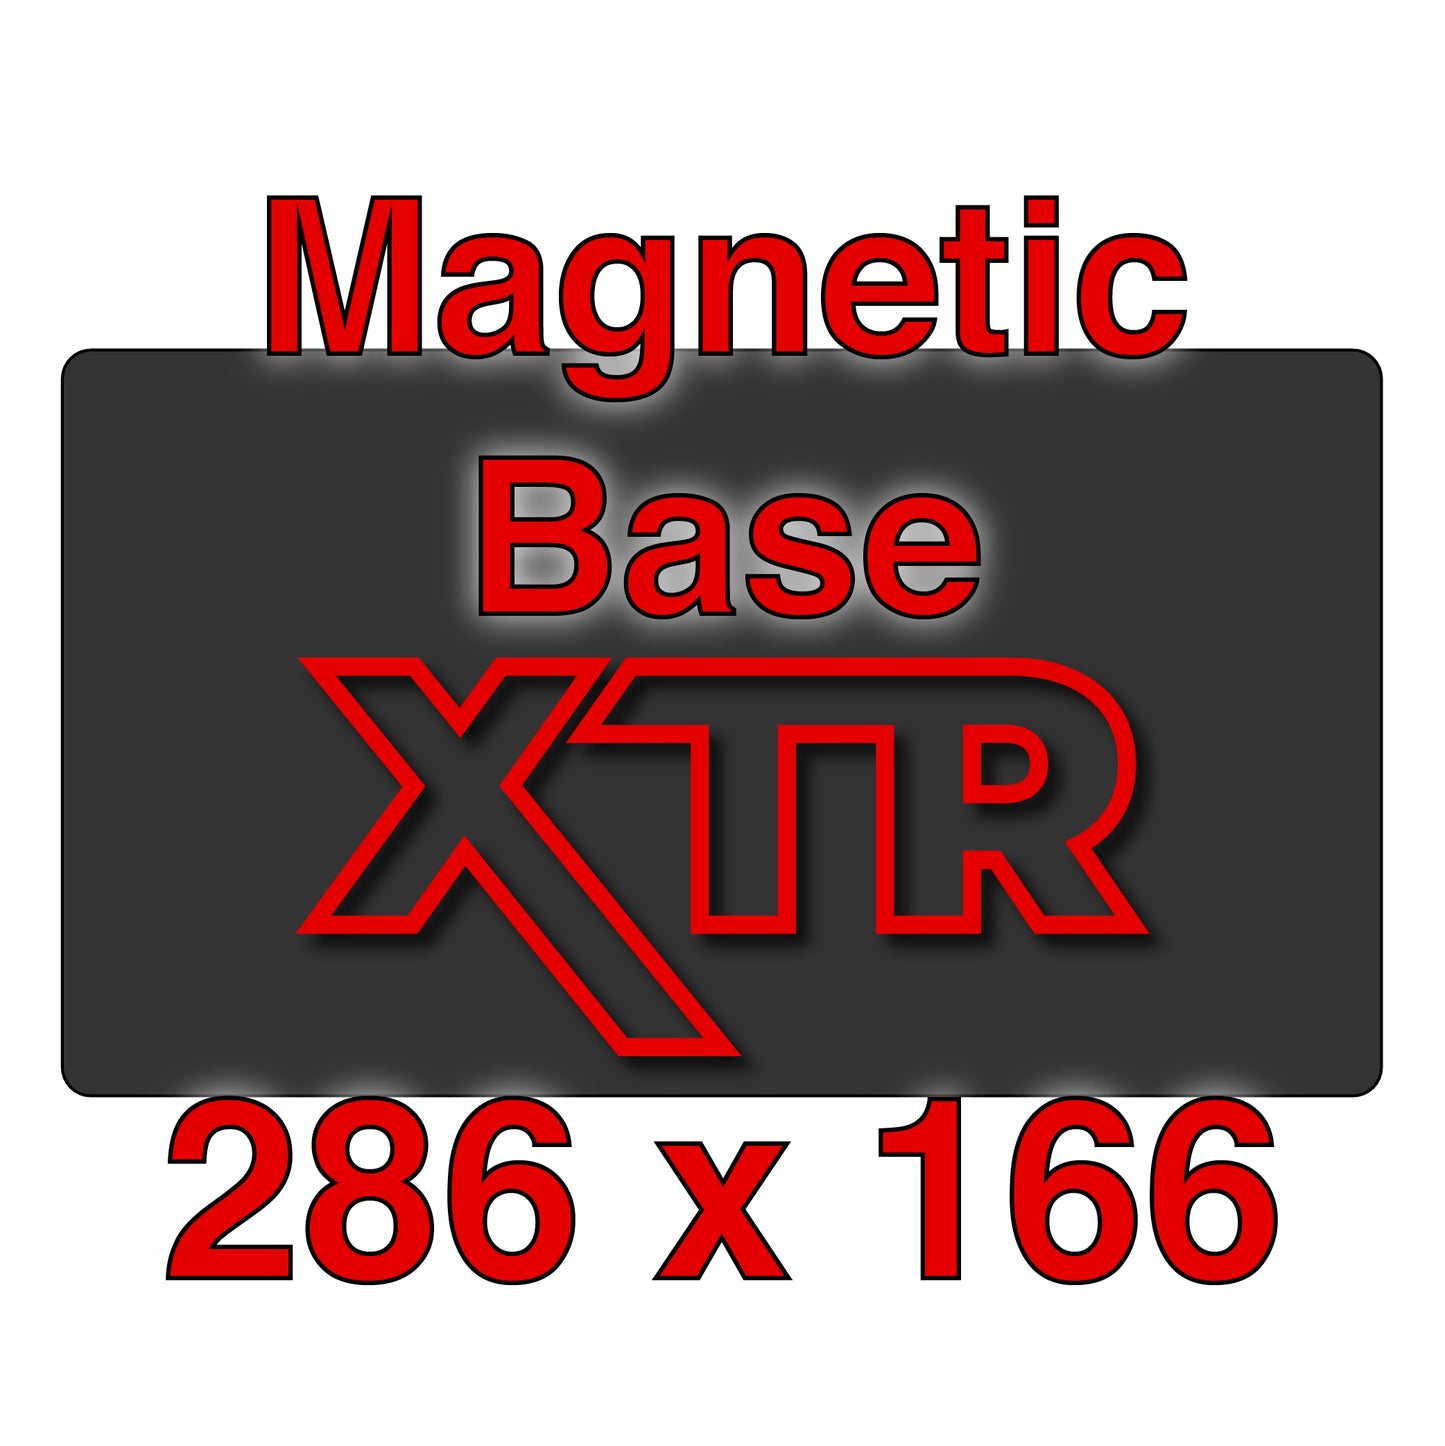 XTR Magnetic Base - 286 x 166